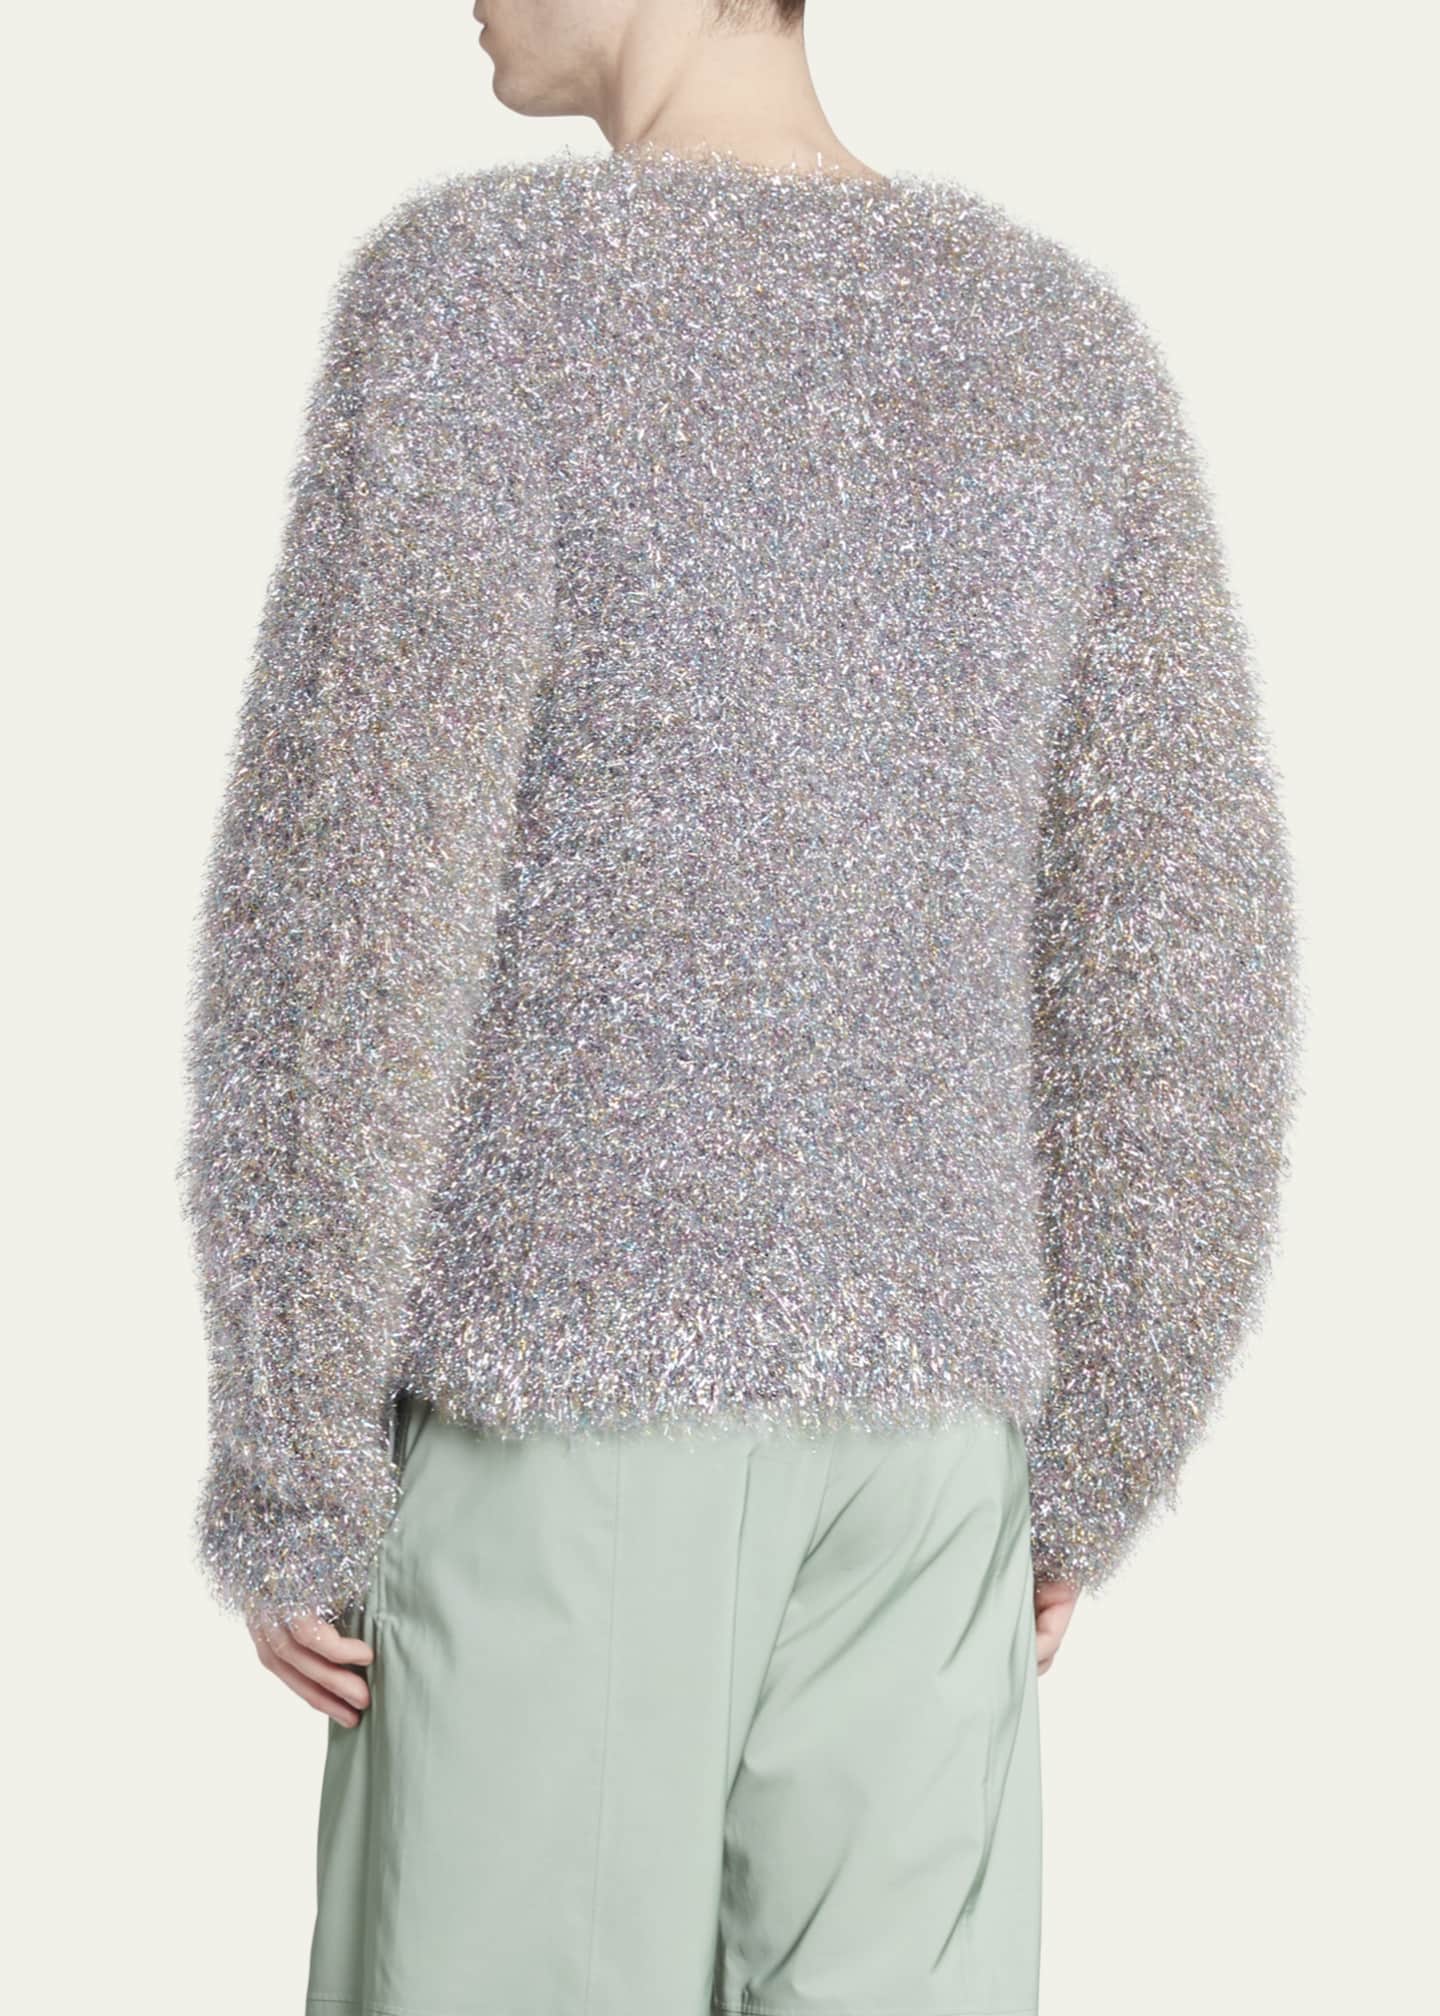 Jil Sander Men's Shaggy Multicolor Lurex Sweater